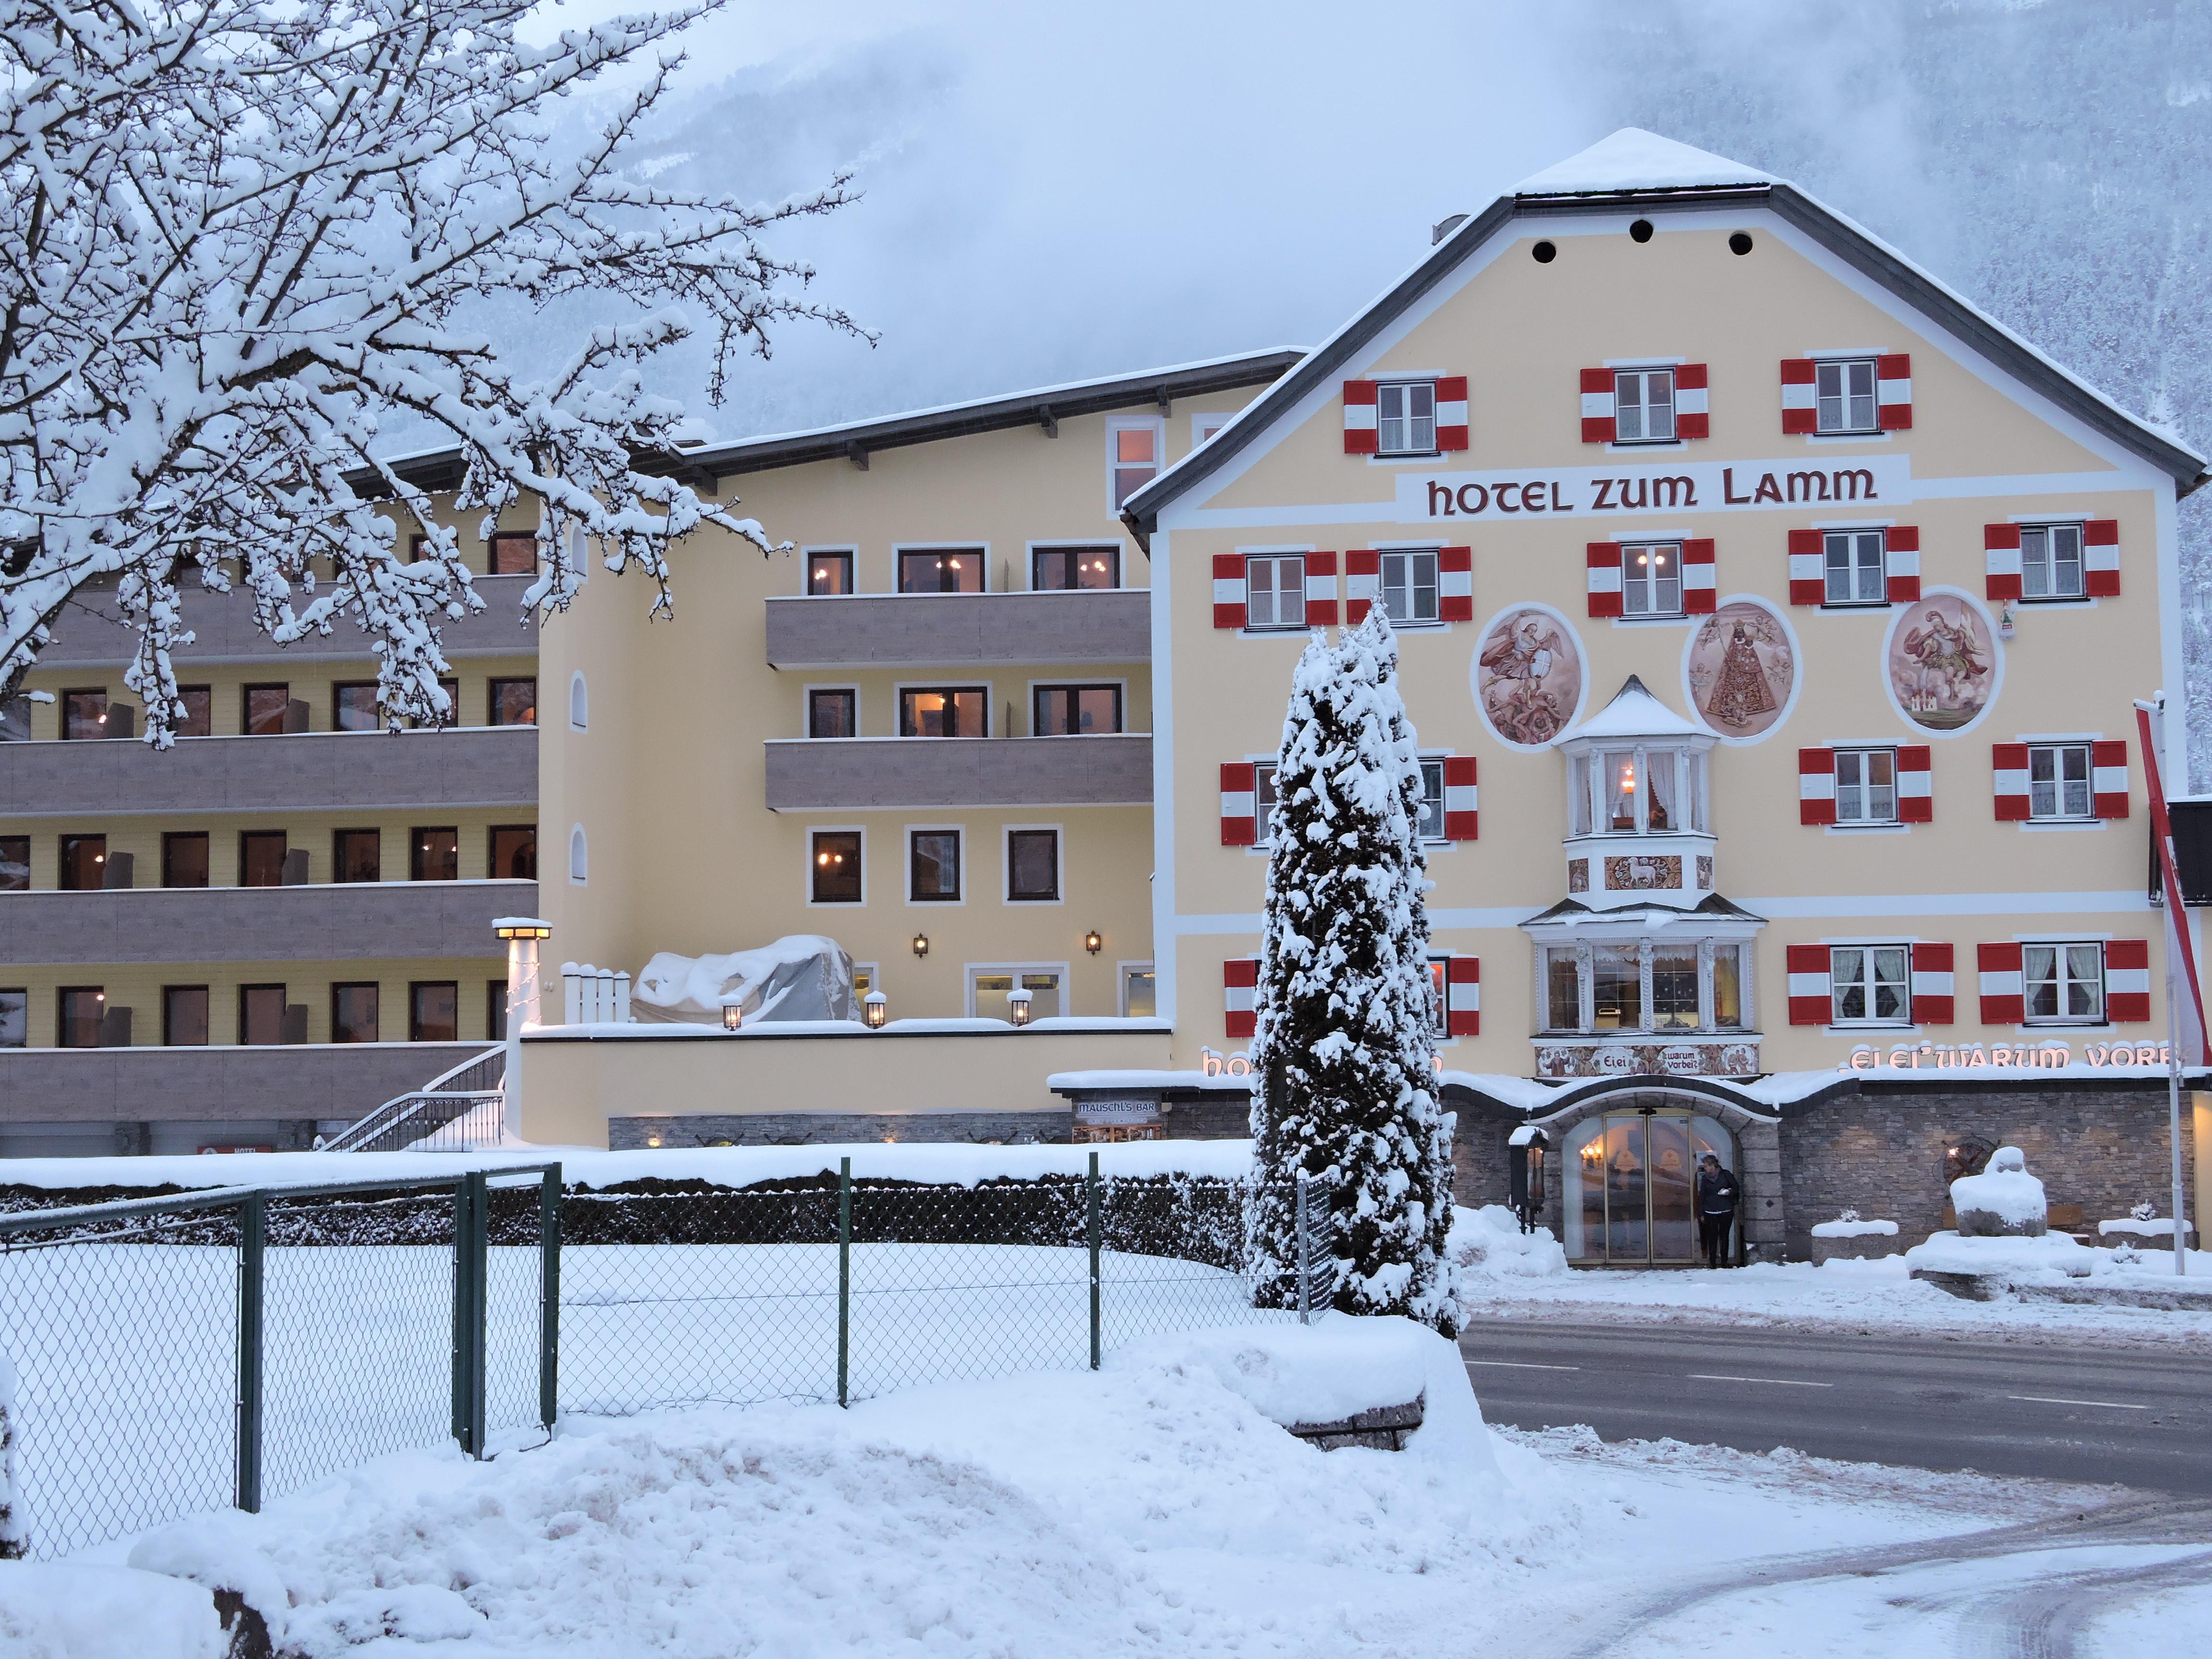 Hotel zum Lamm Winter